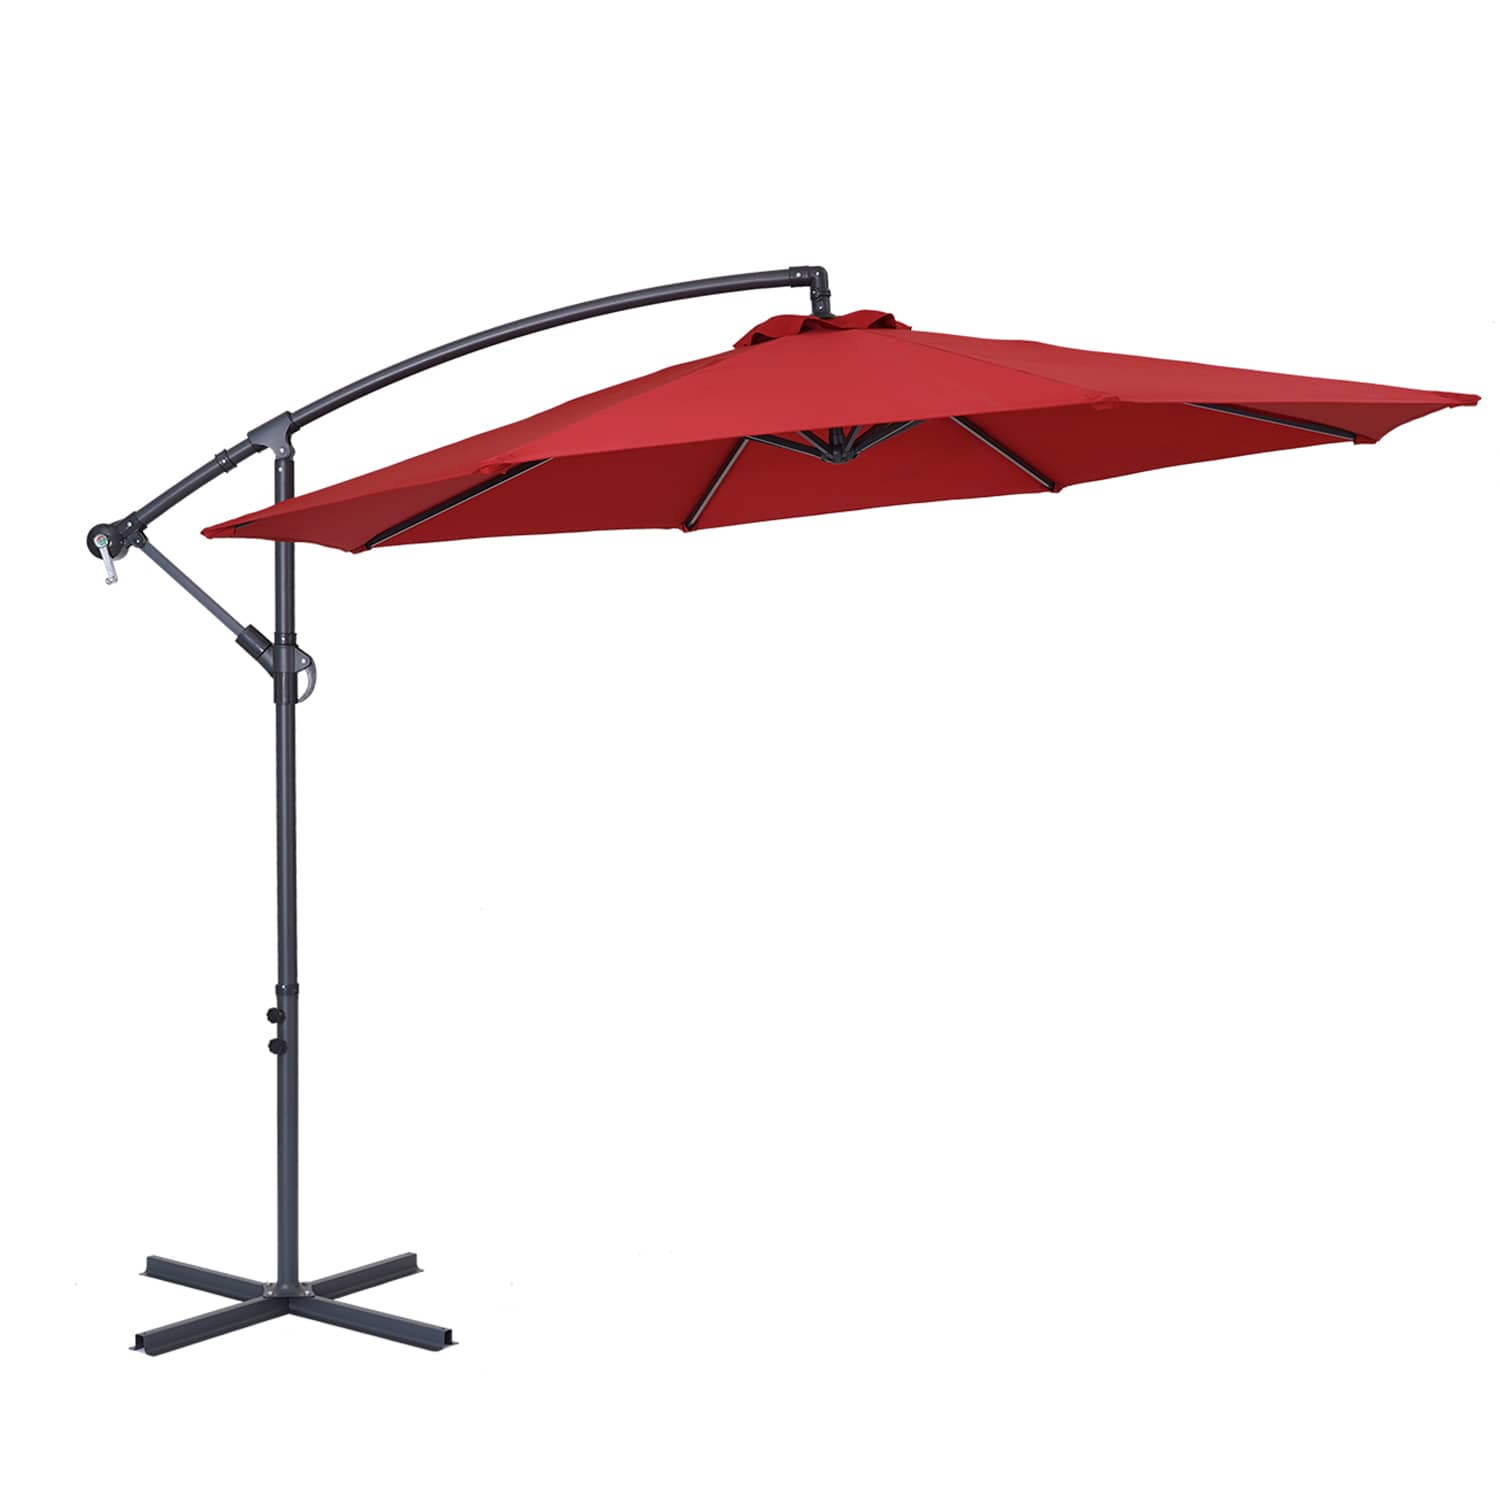 CASAINC 10Ft Patio Offset Umbrella